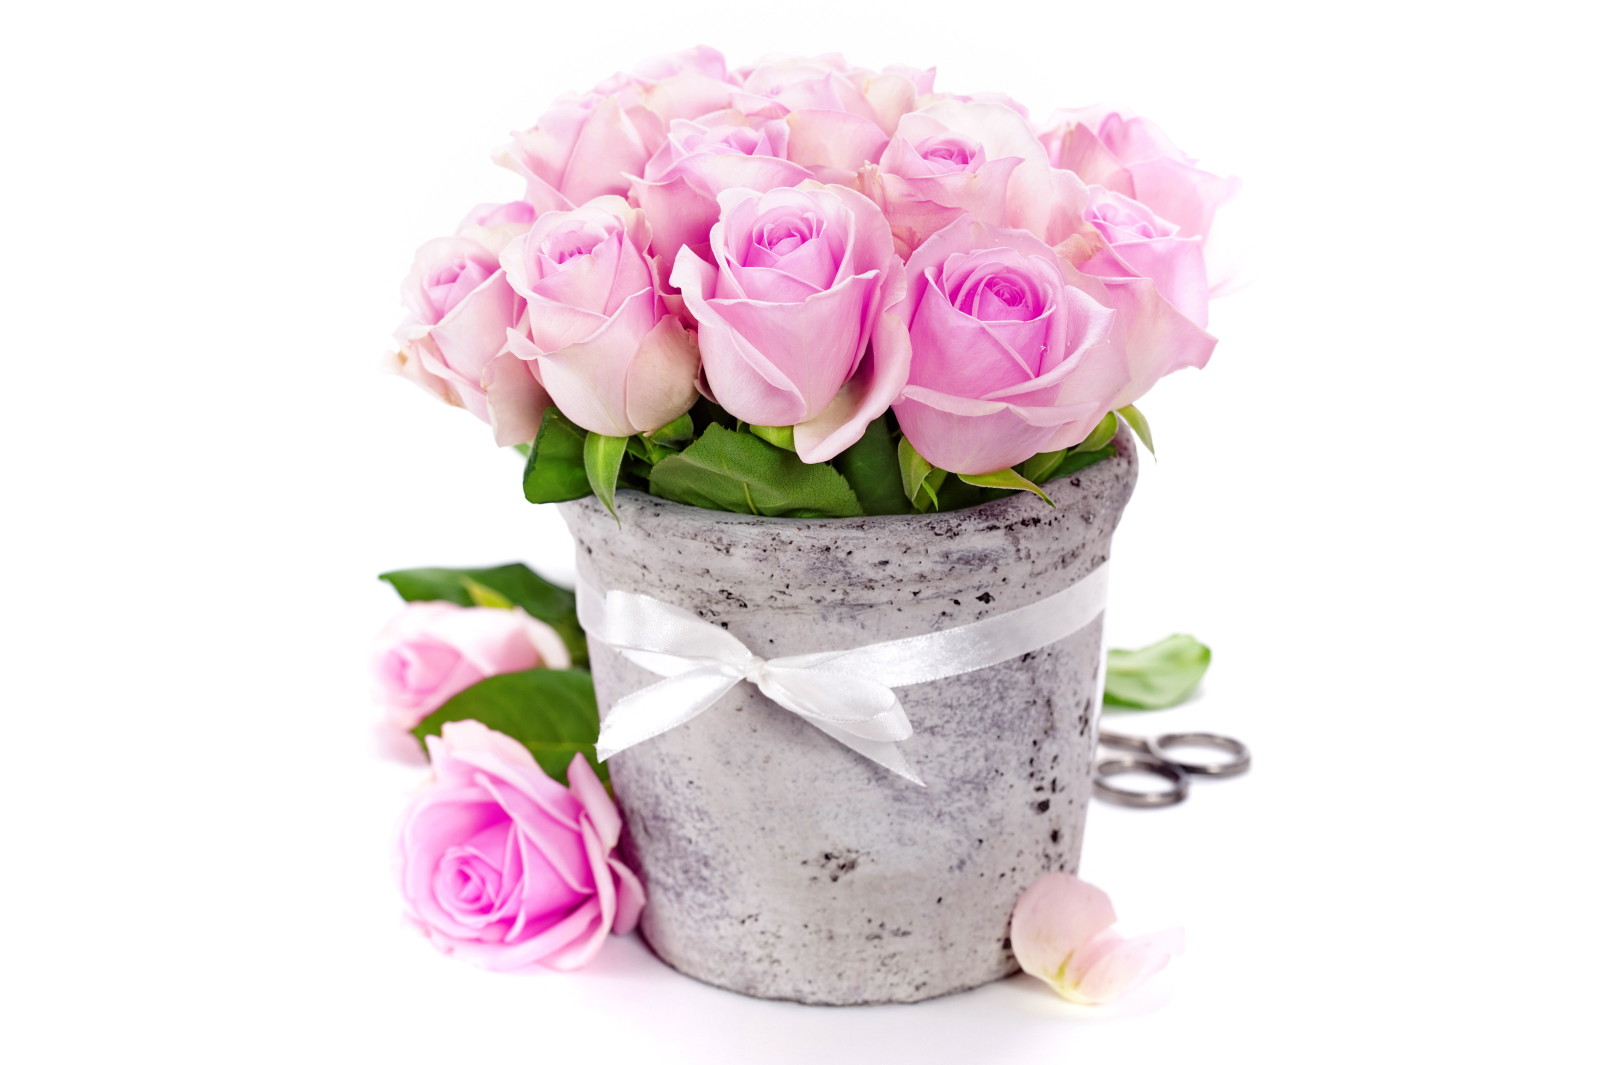 romantis, mawar, Merah Jambu, bunga-bunga, buket, vas, pita